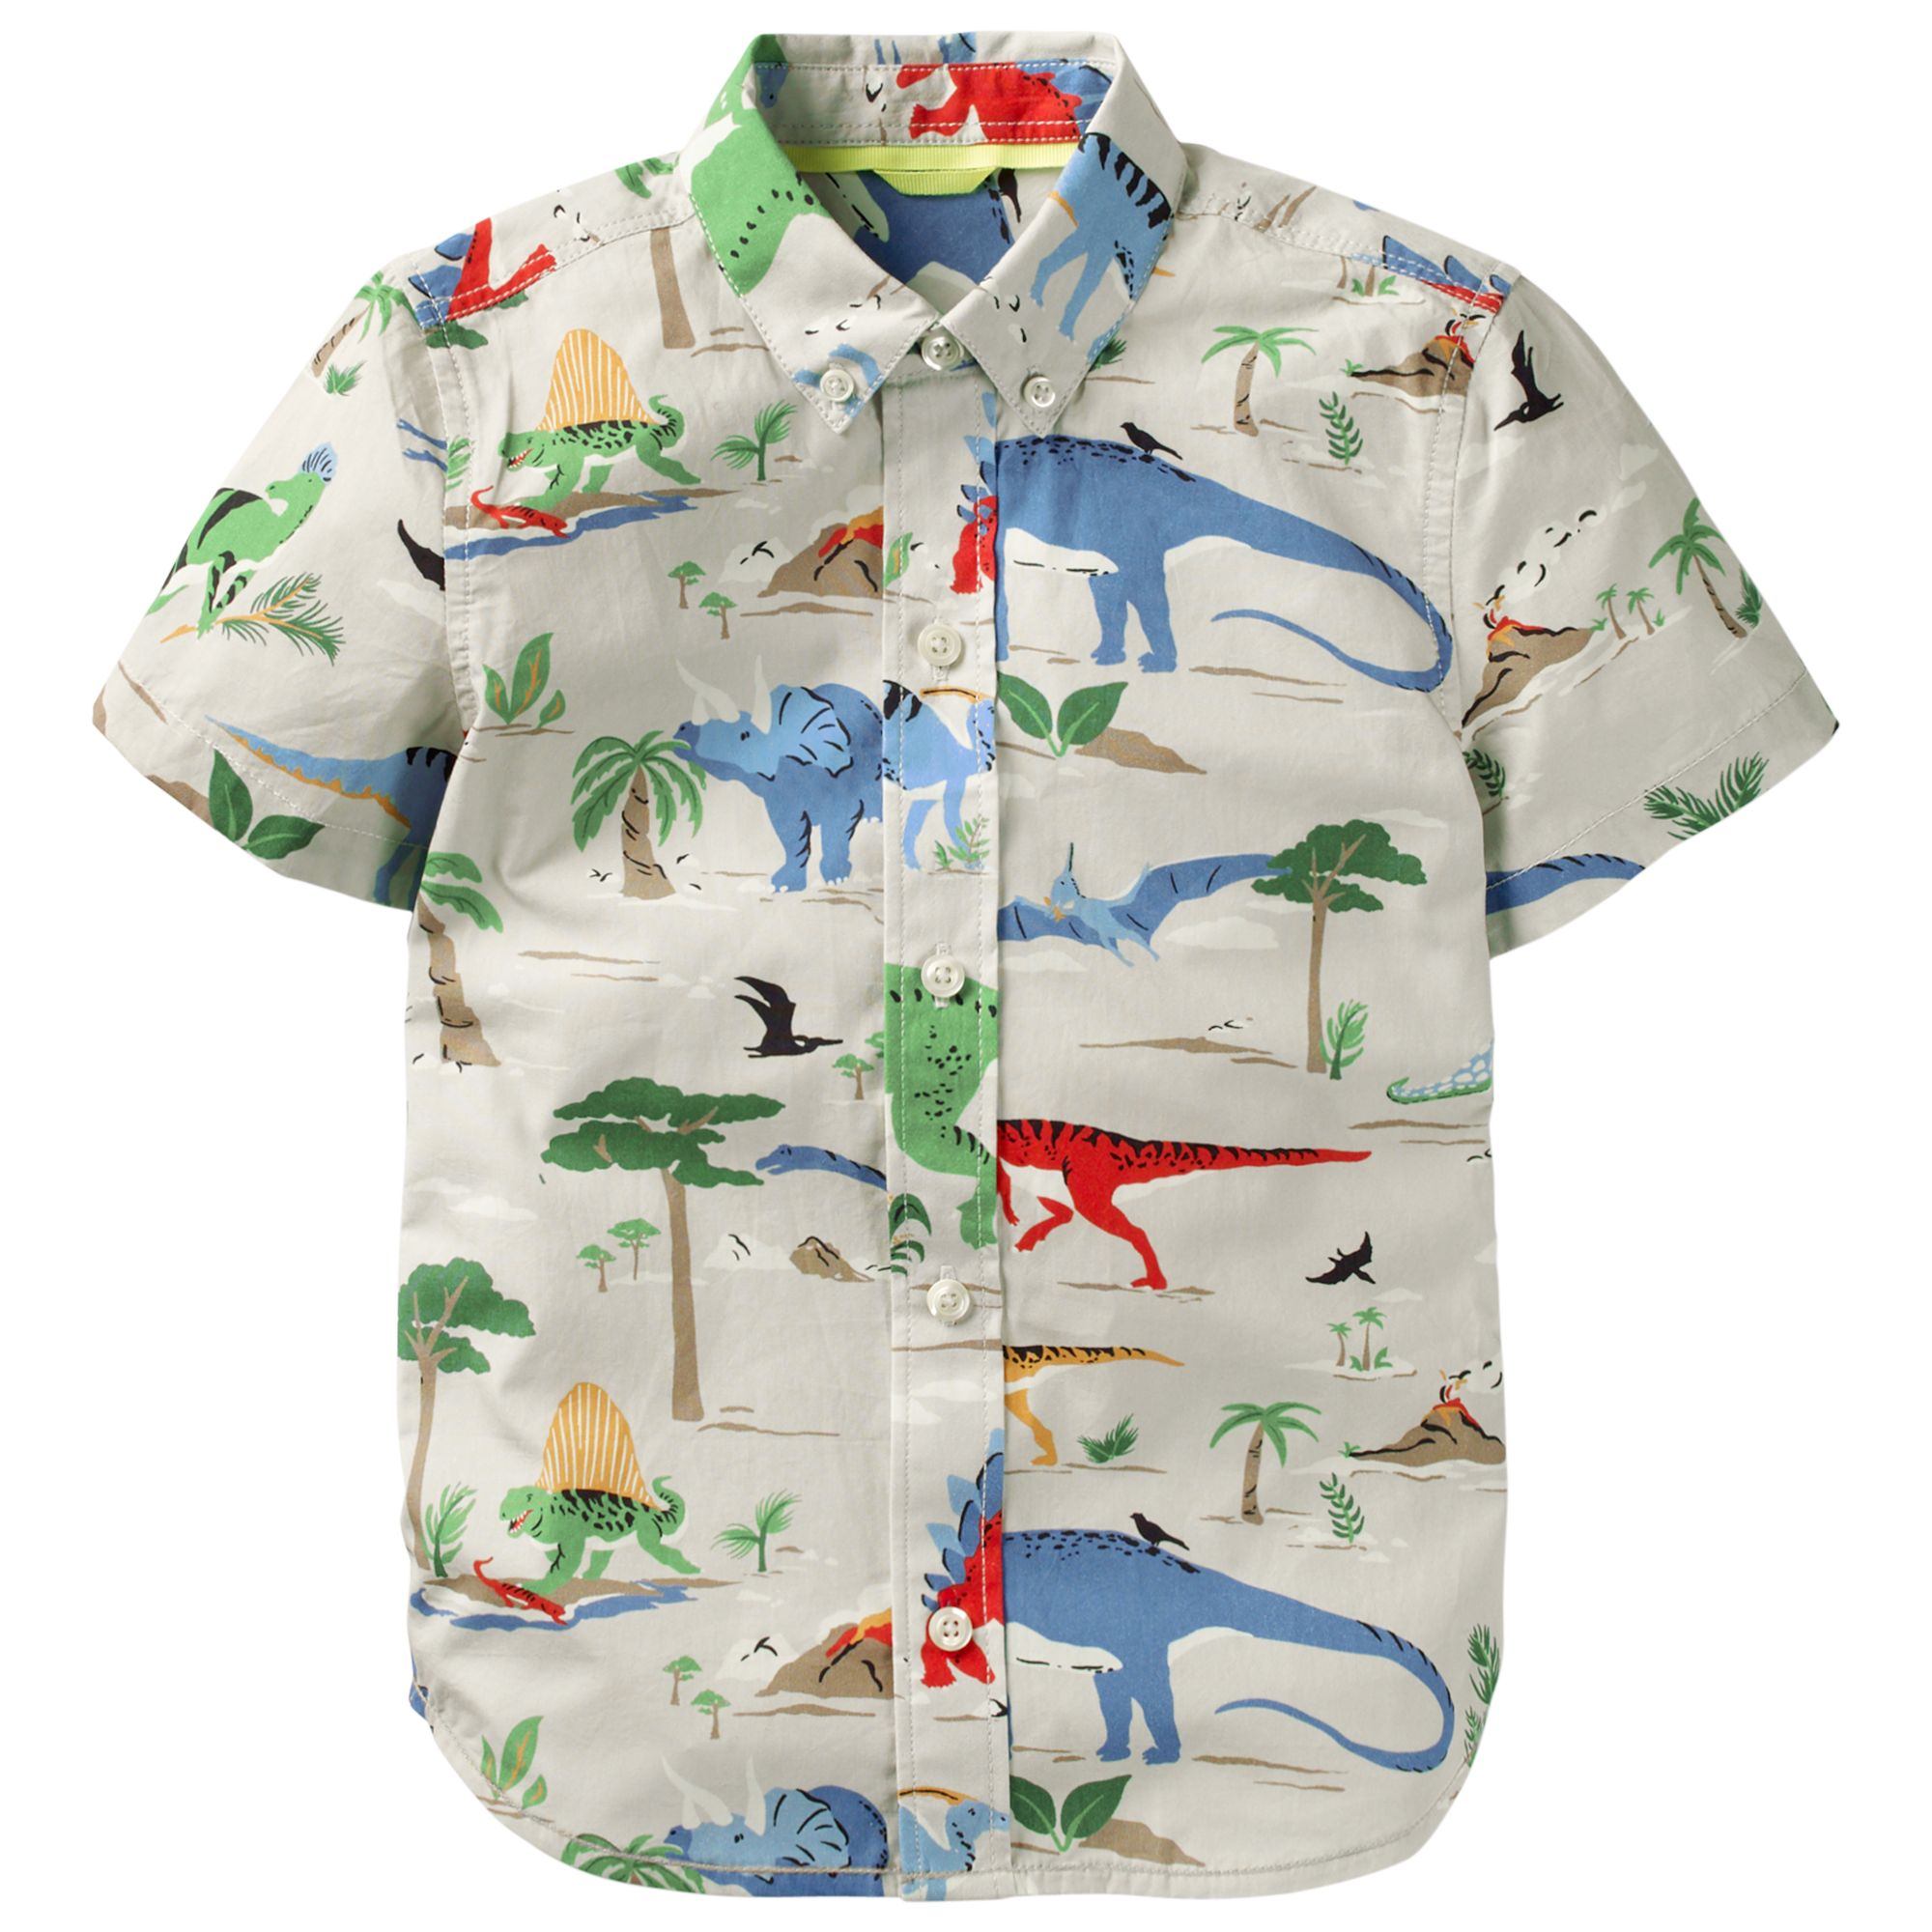 John Lewis Boys Dinosaur Long Sleeve T-Shirt Multicoloured Age 6 Years Free P&P 